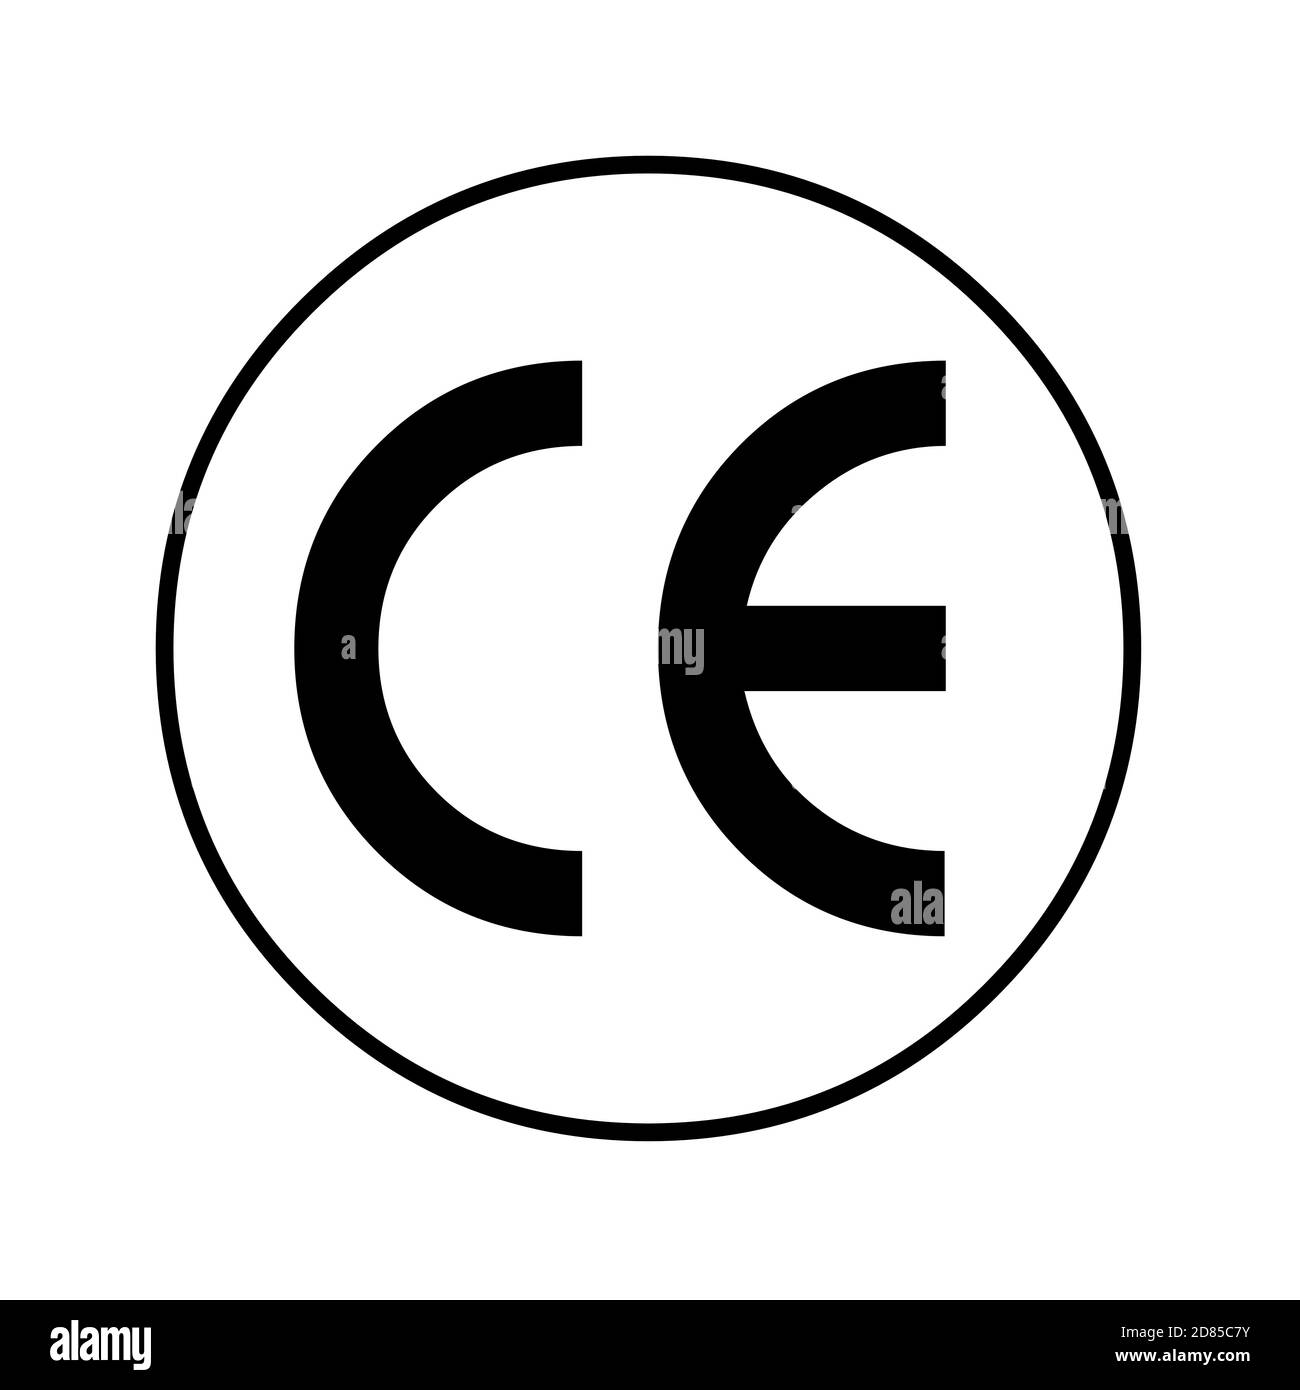 CE mark and symbol icon Stock Photo